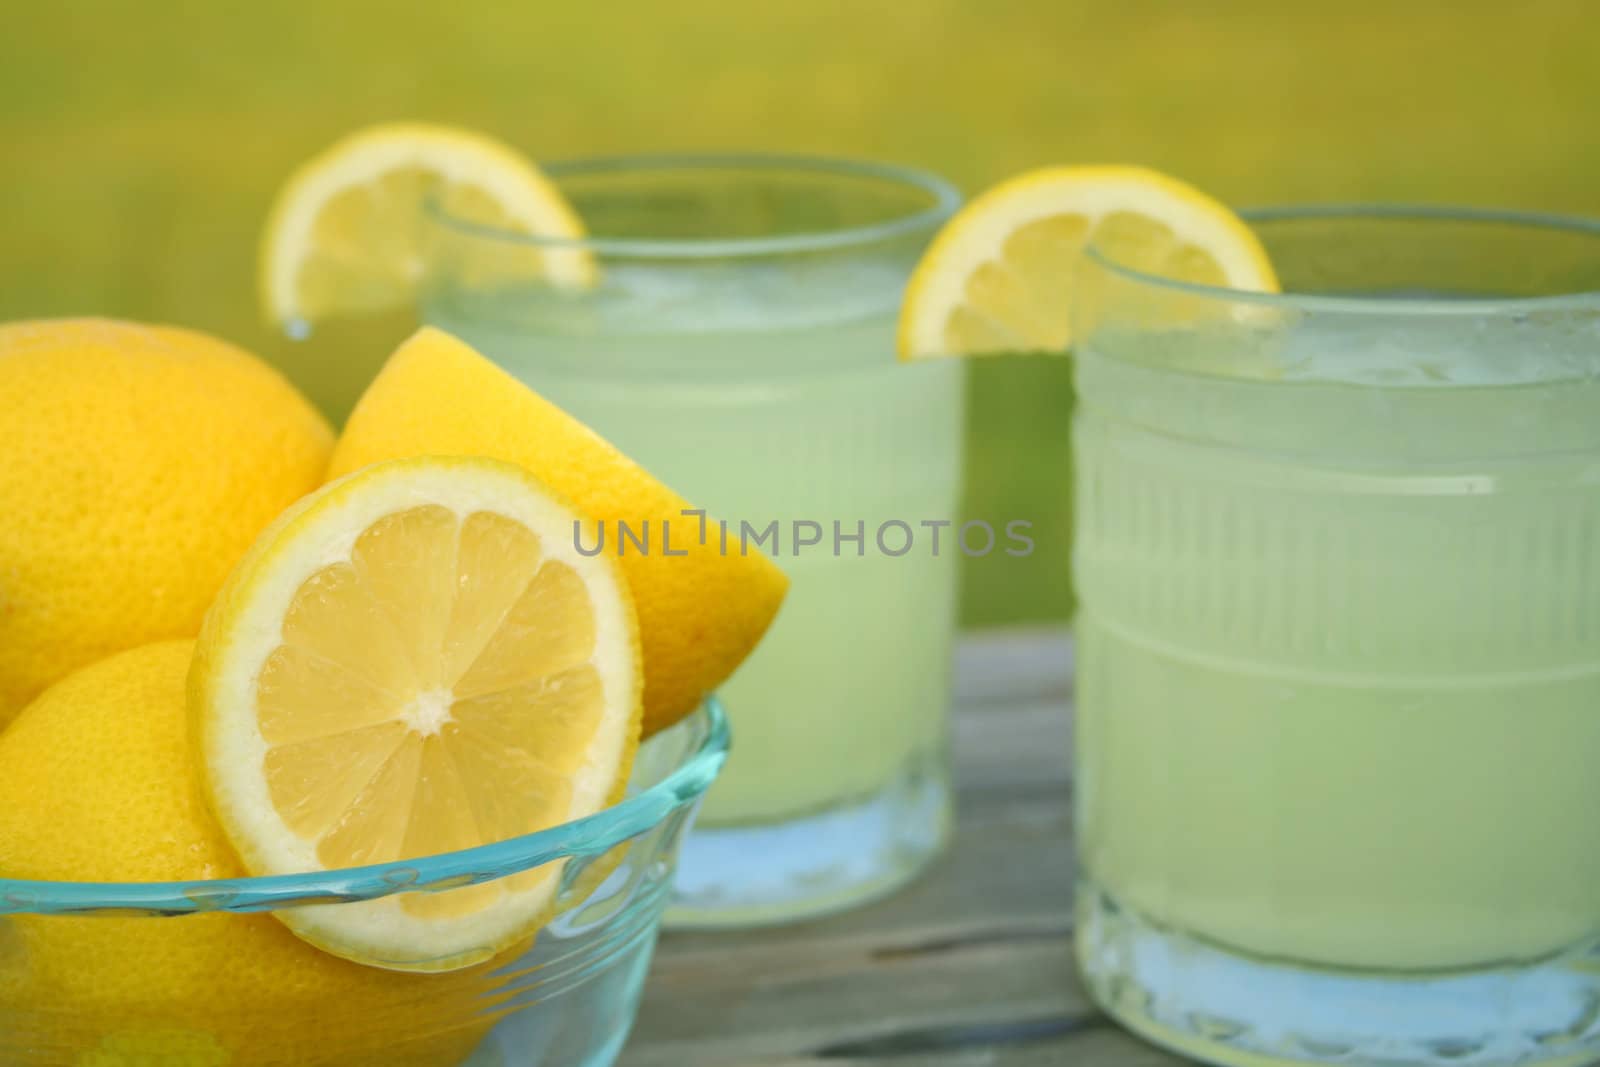 Two glasses of fresh lemonade and a bowl full of lemons outside on a summers day.